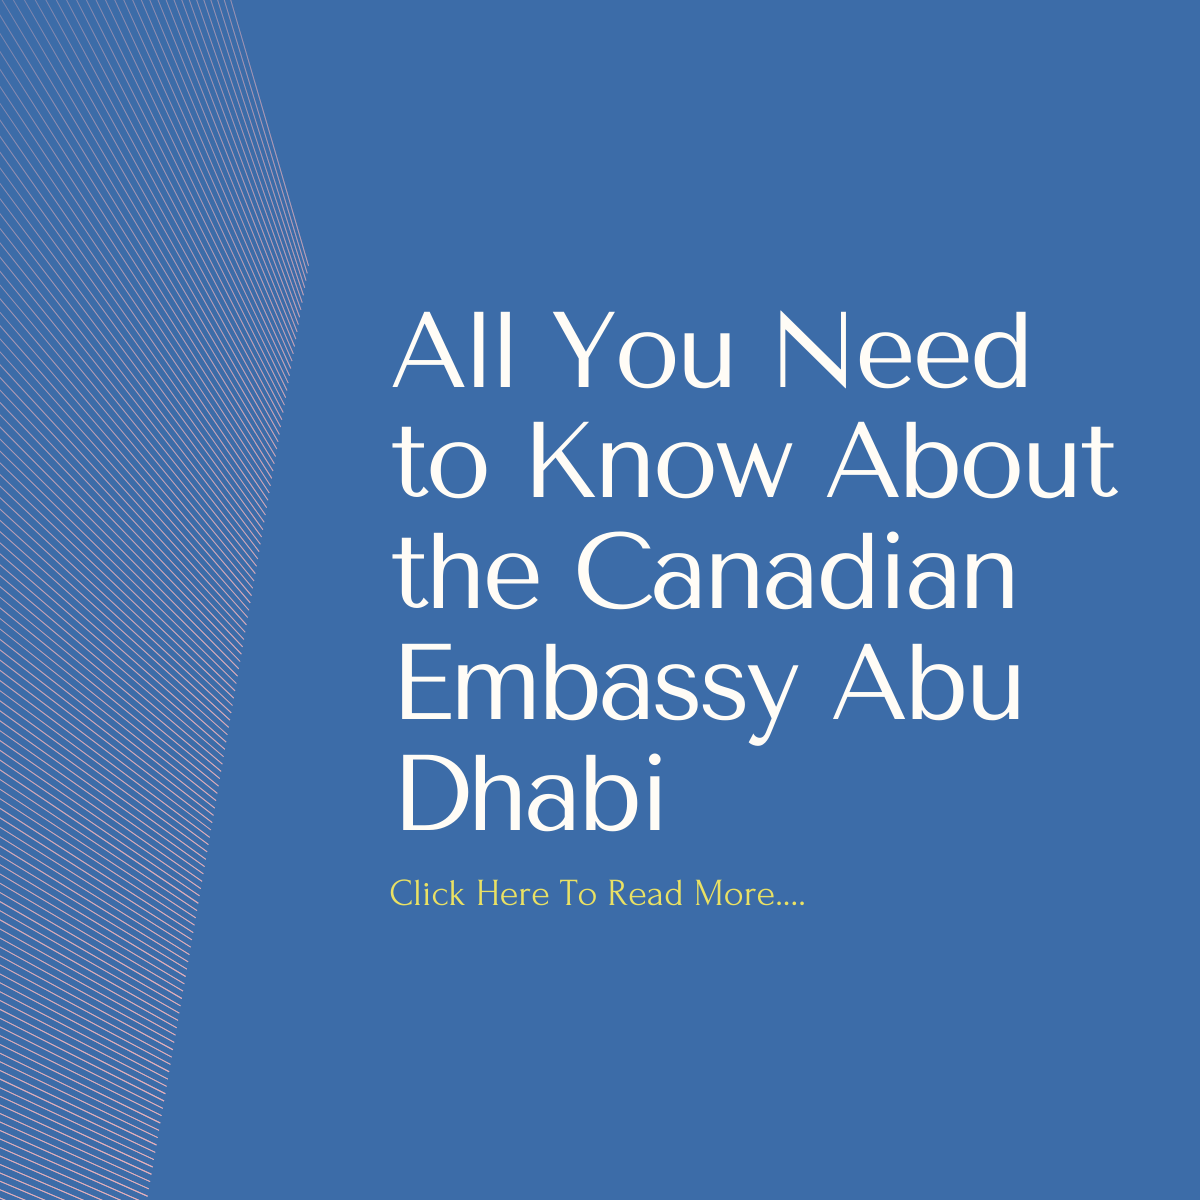 Canadian Embassy Abu Dhabi